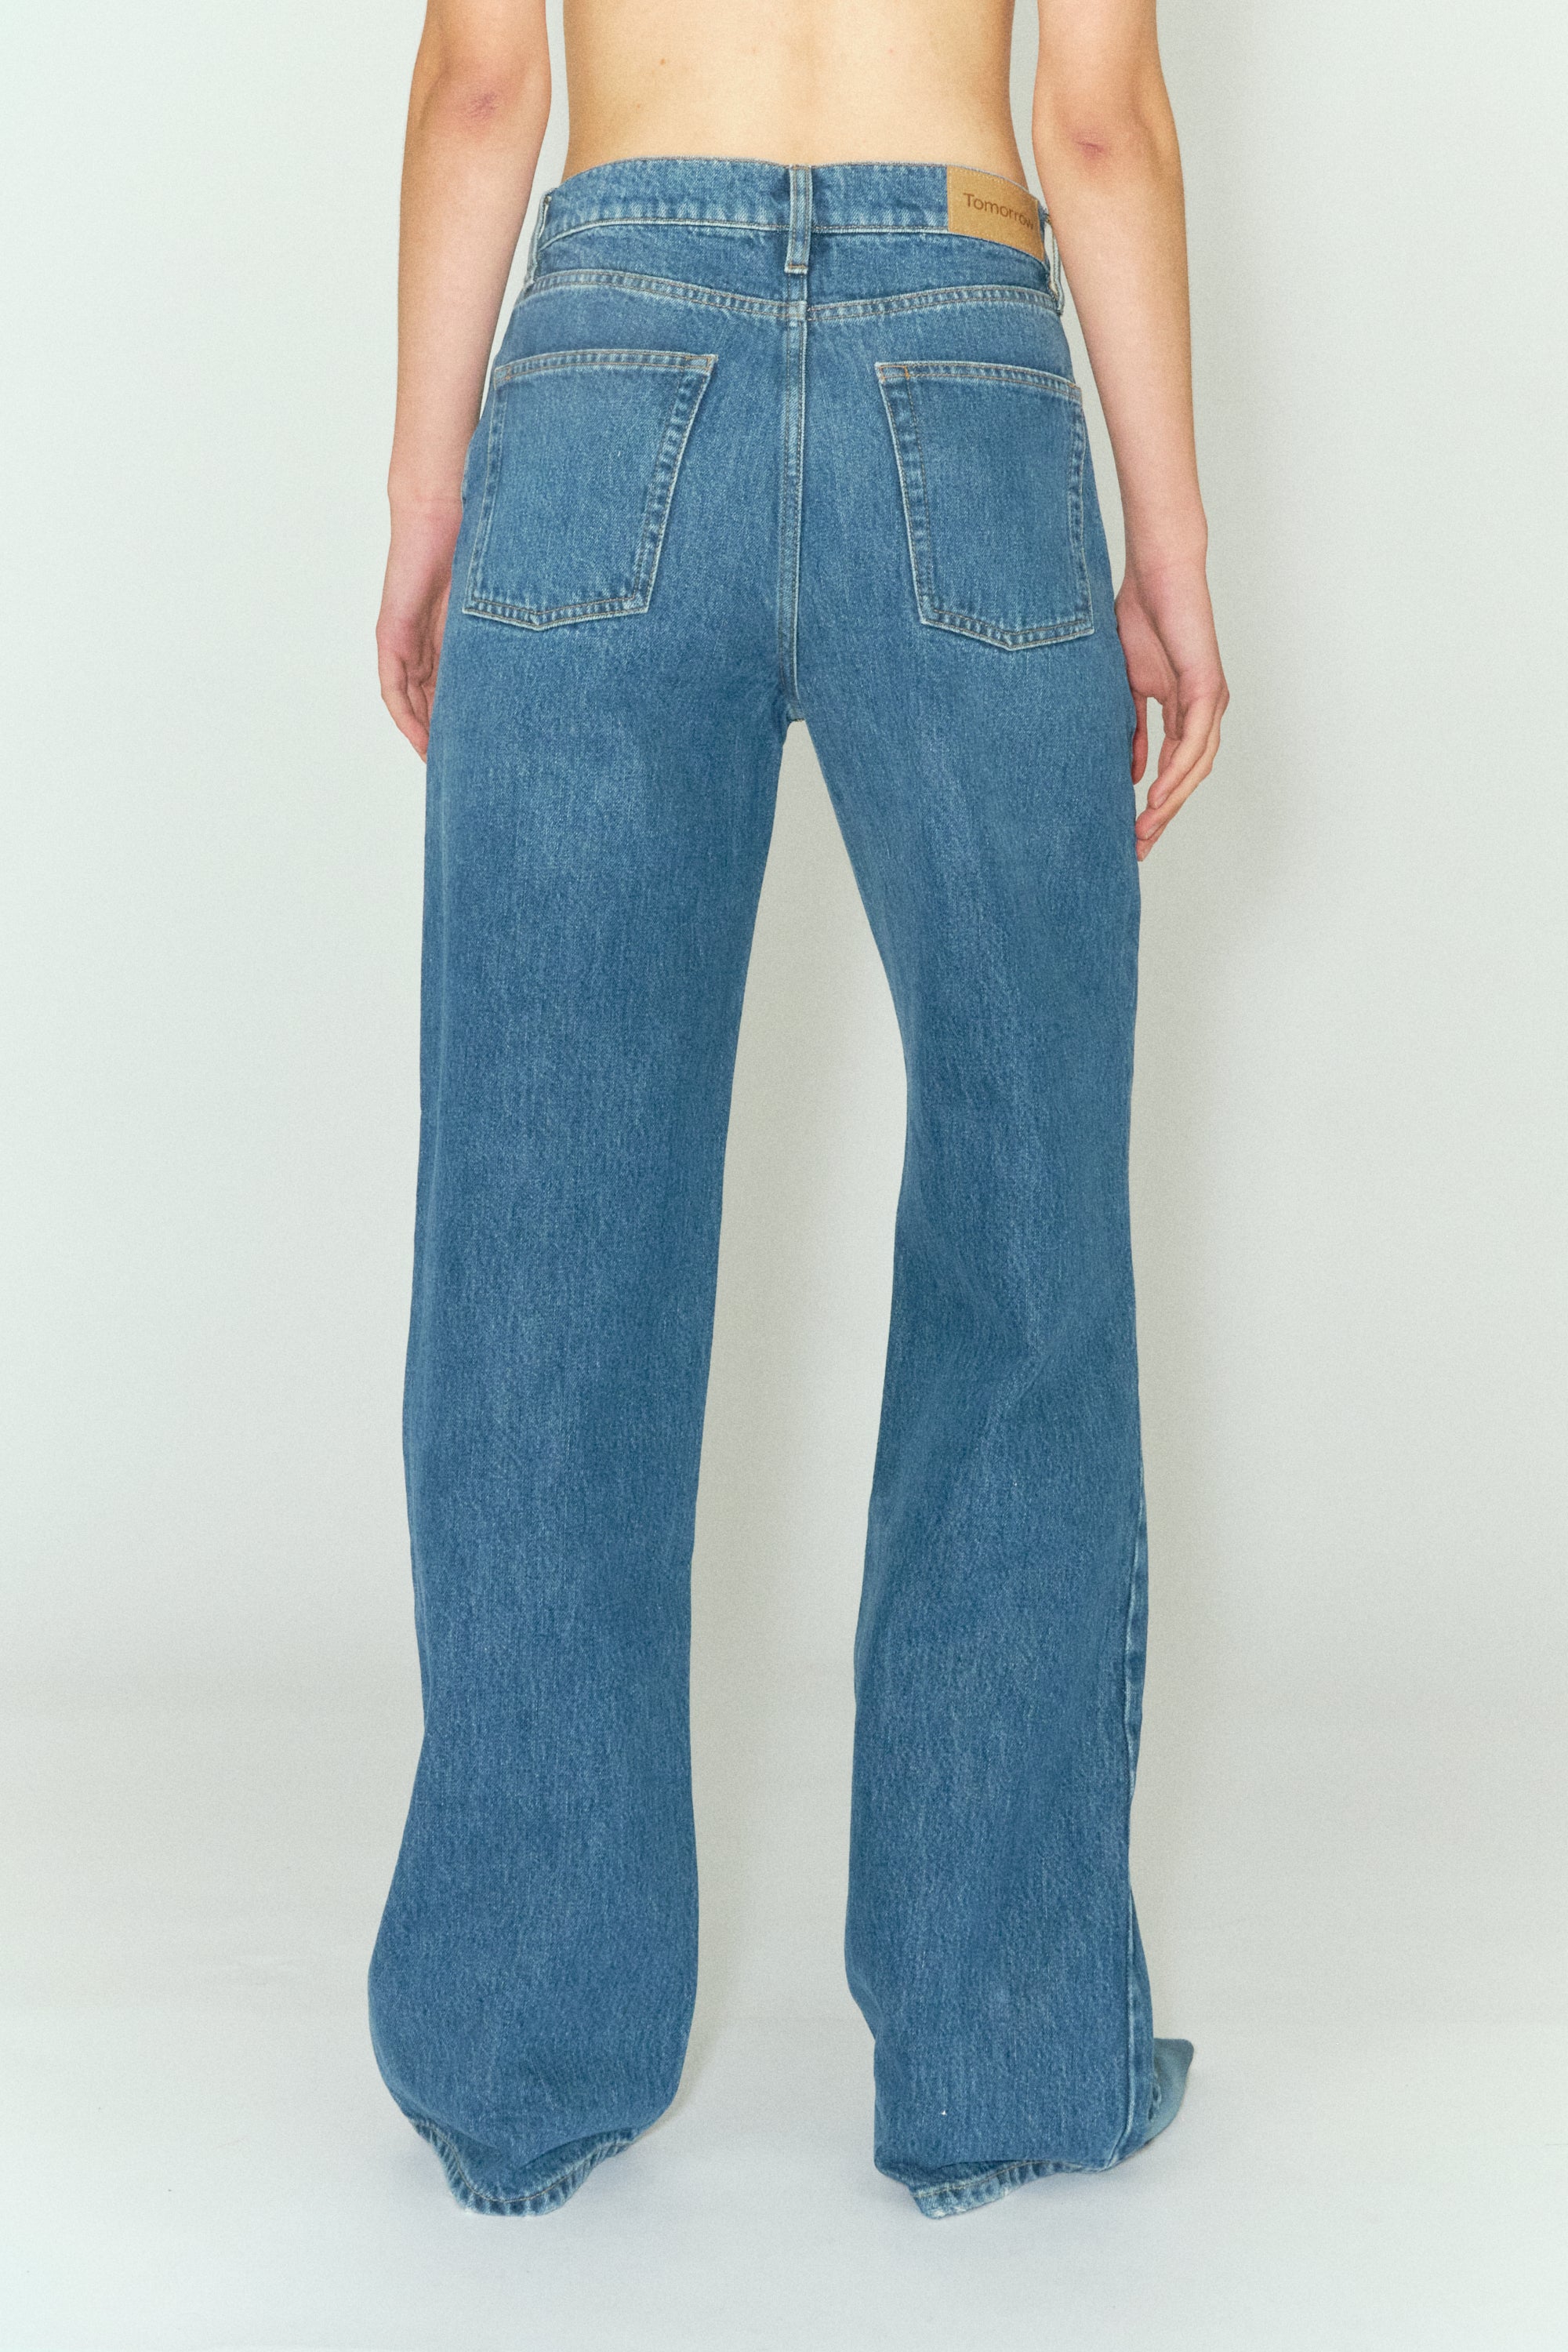 Tomorrow TMRW Brown Jeans - Bright Orlando Jeans & Pants 51 Denim Blue